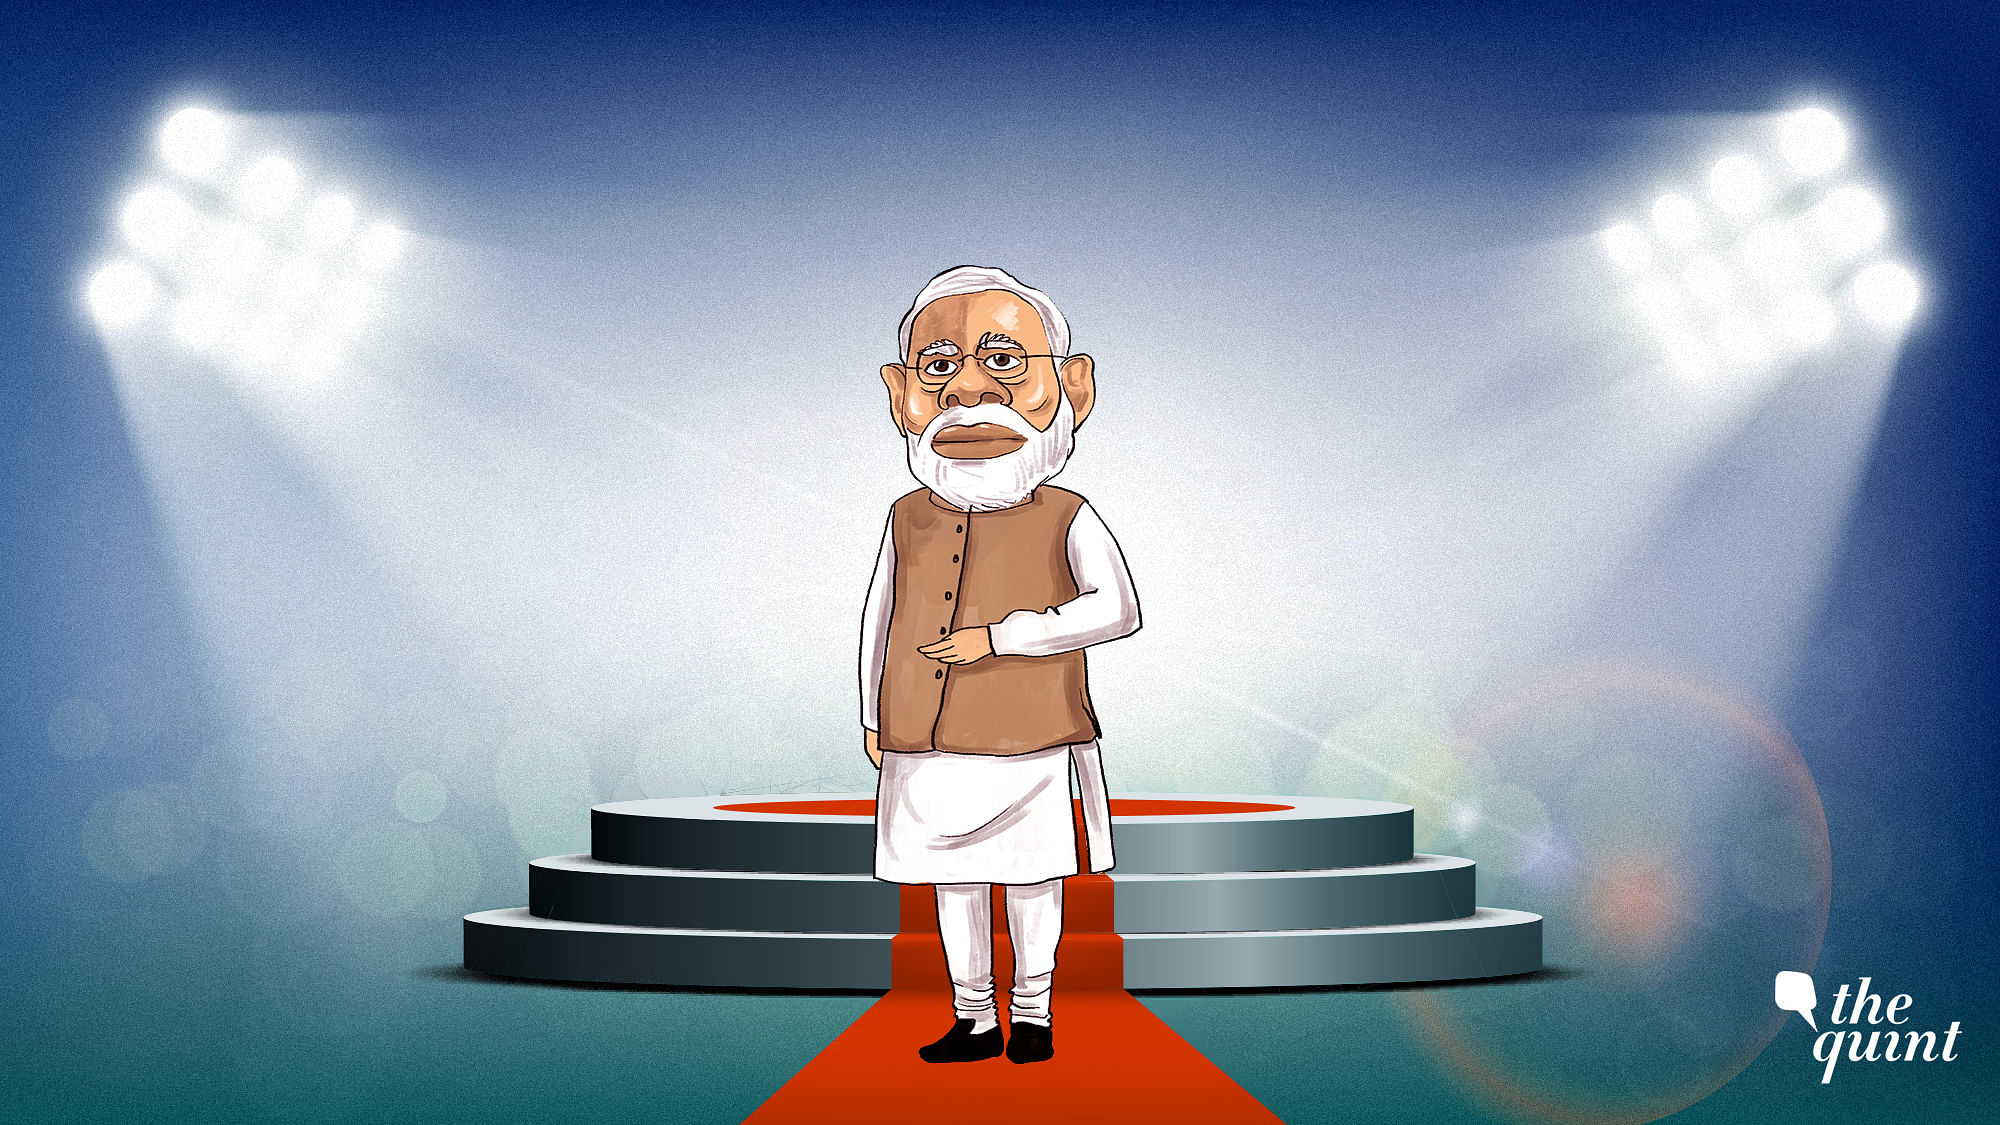 Illustration of PM Modi used for representational purposes.